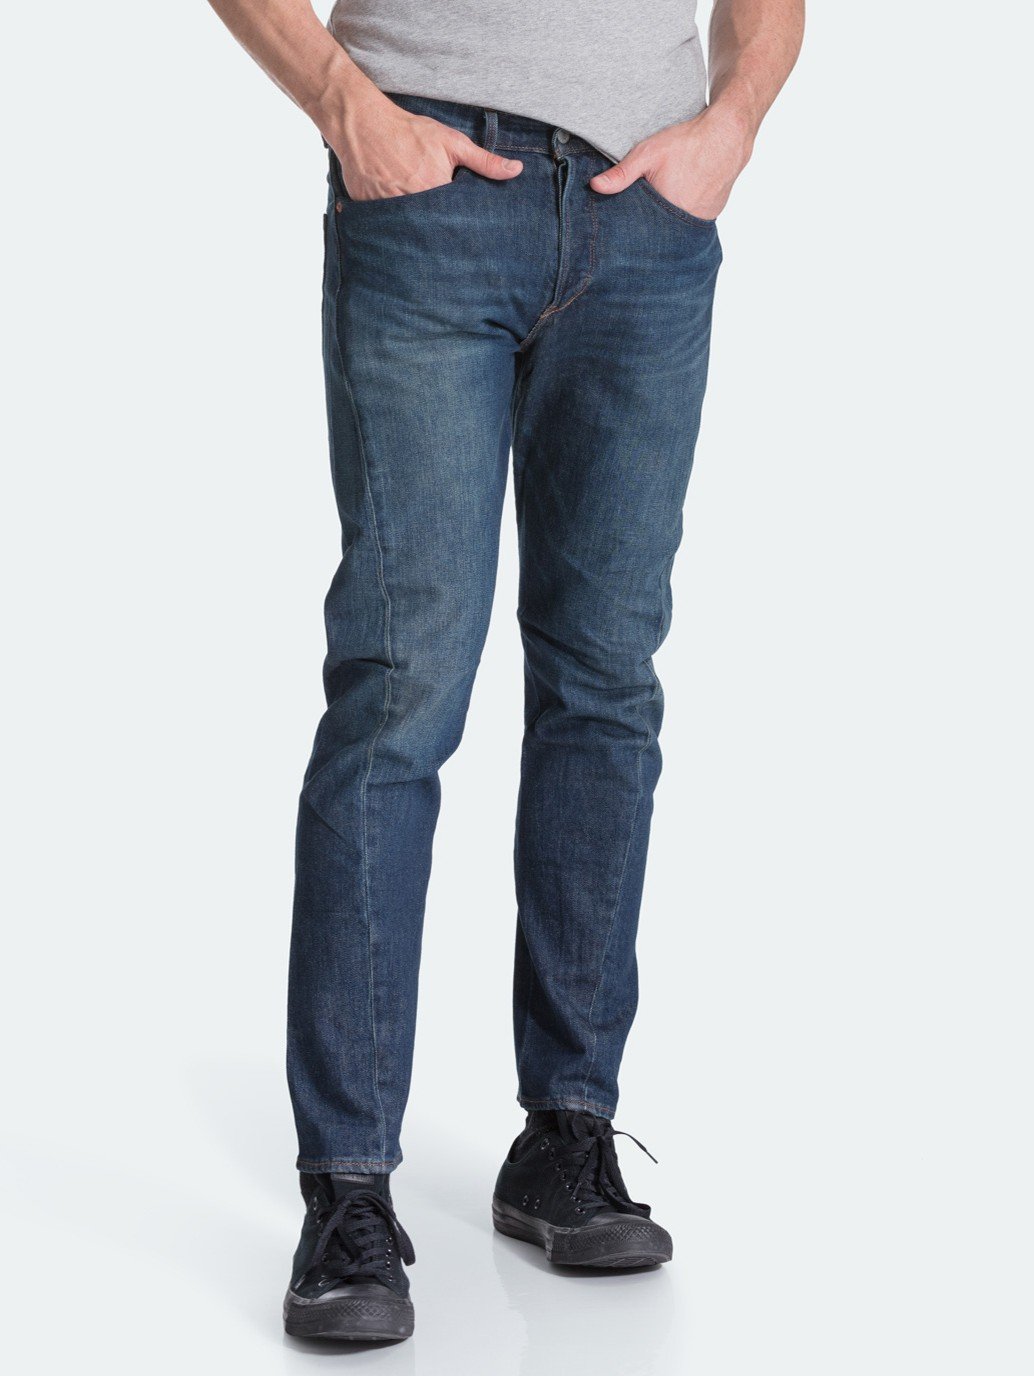 levi's 502 regular taper fit jeans